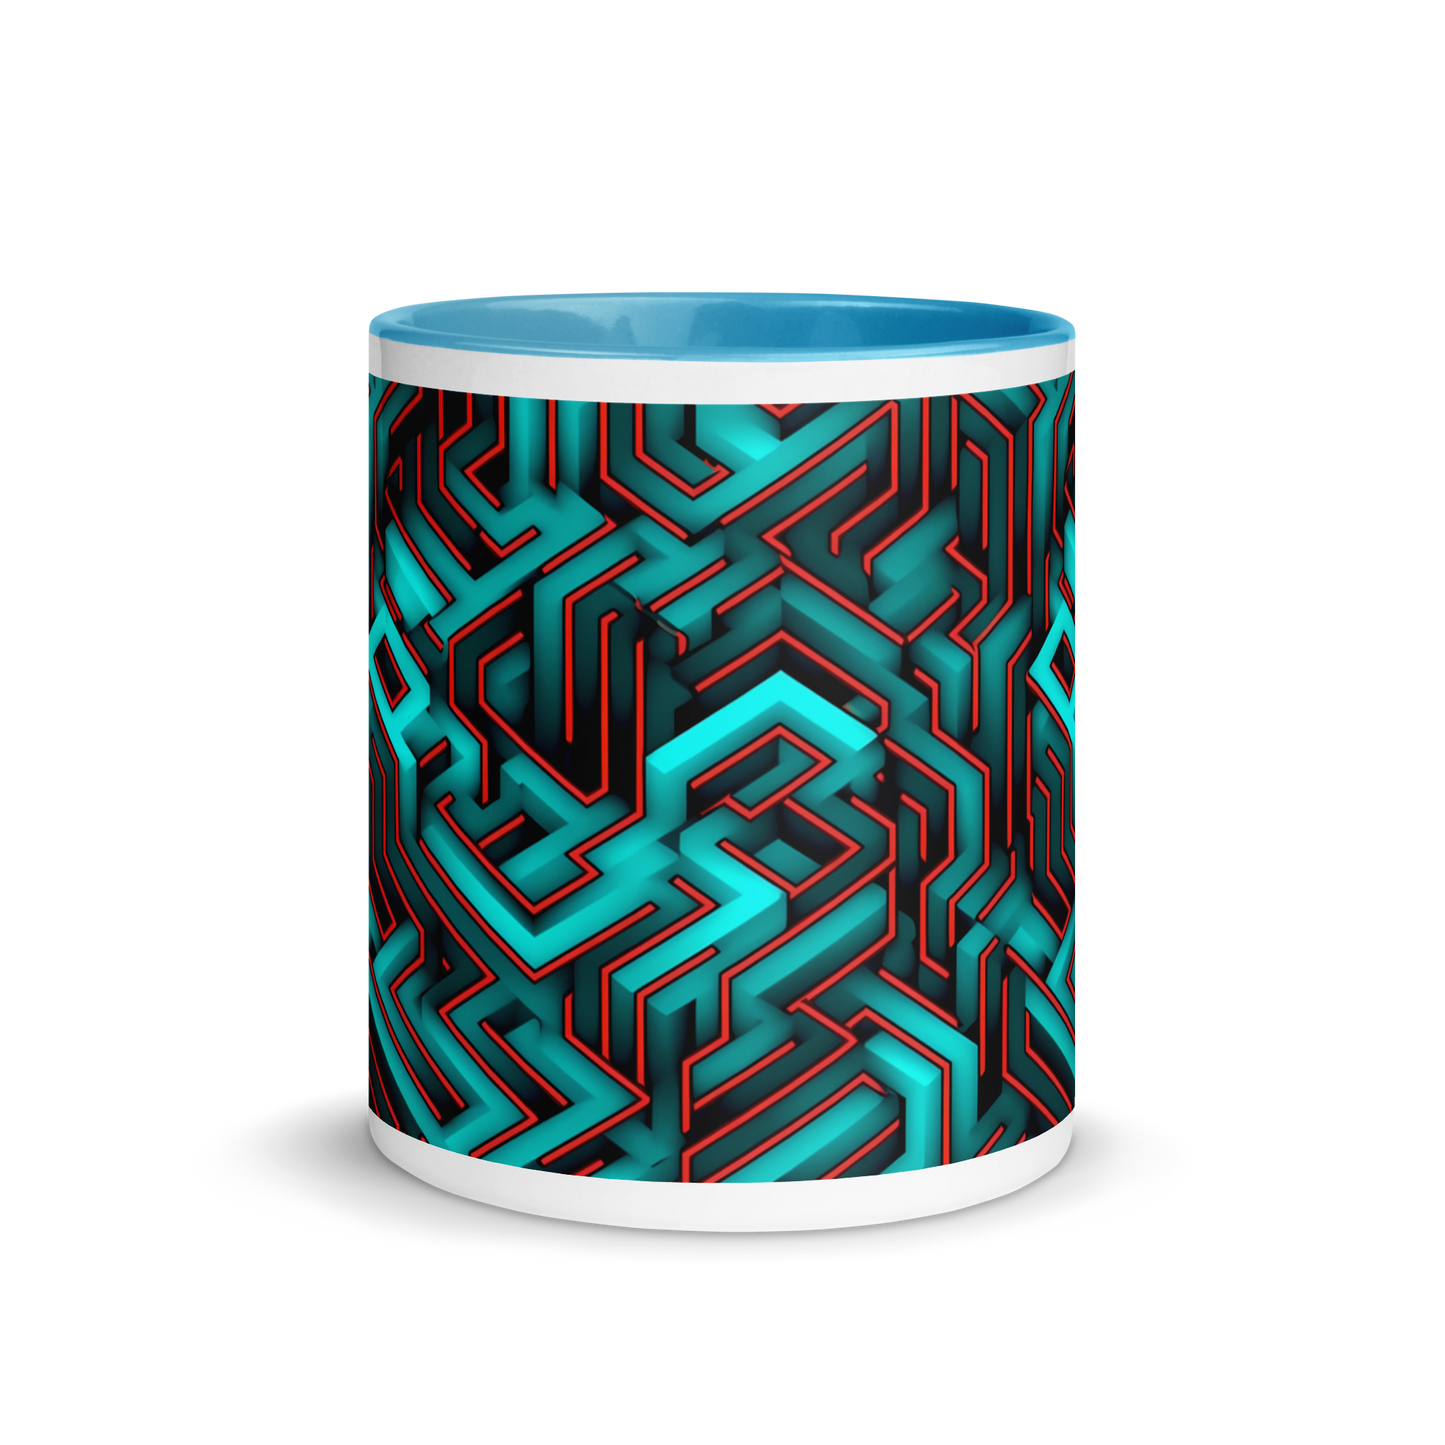 3D Maze Illusion | 3D Patterns | White Ceramic Mug with Color Inside - #2